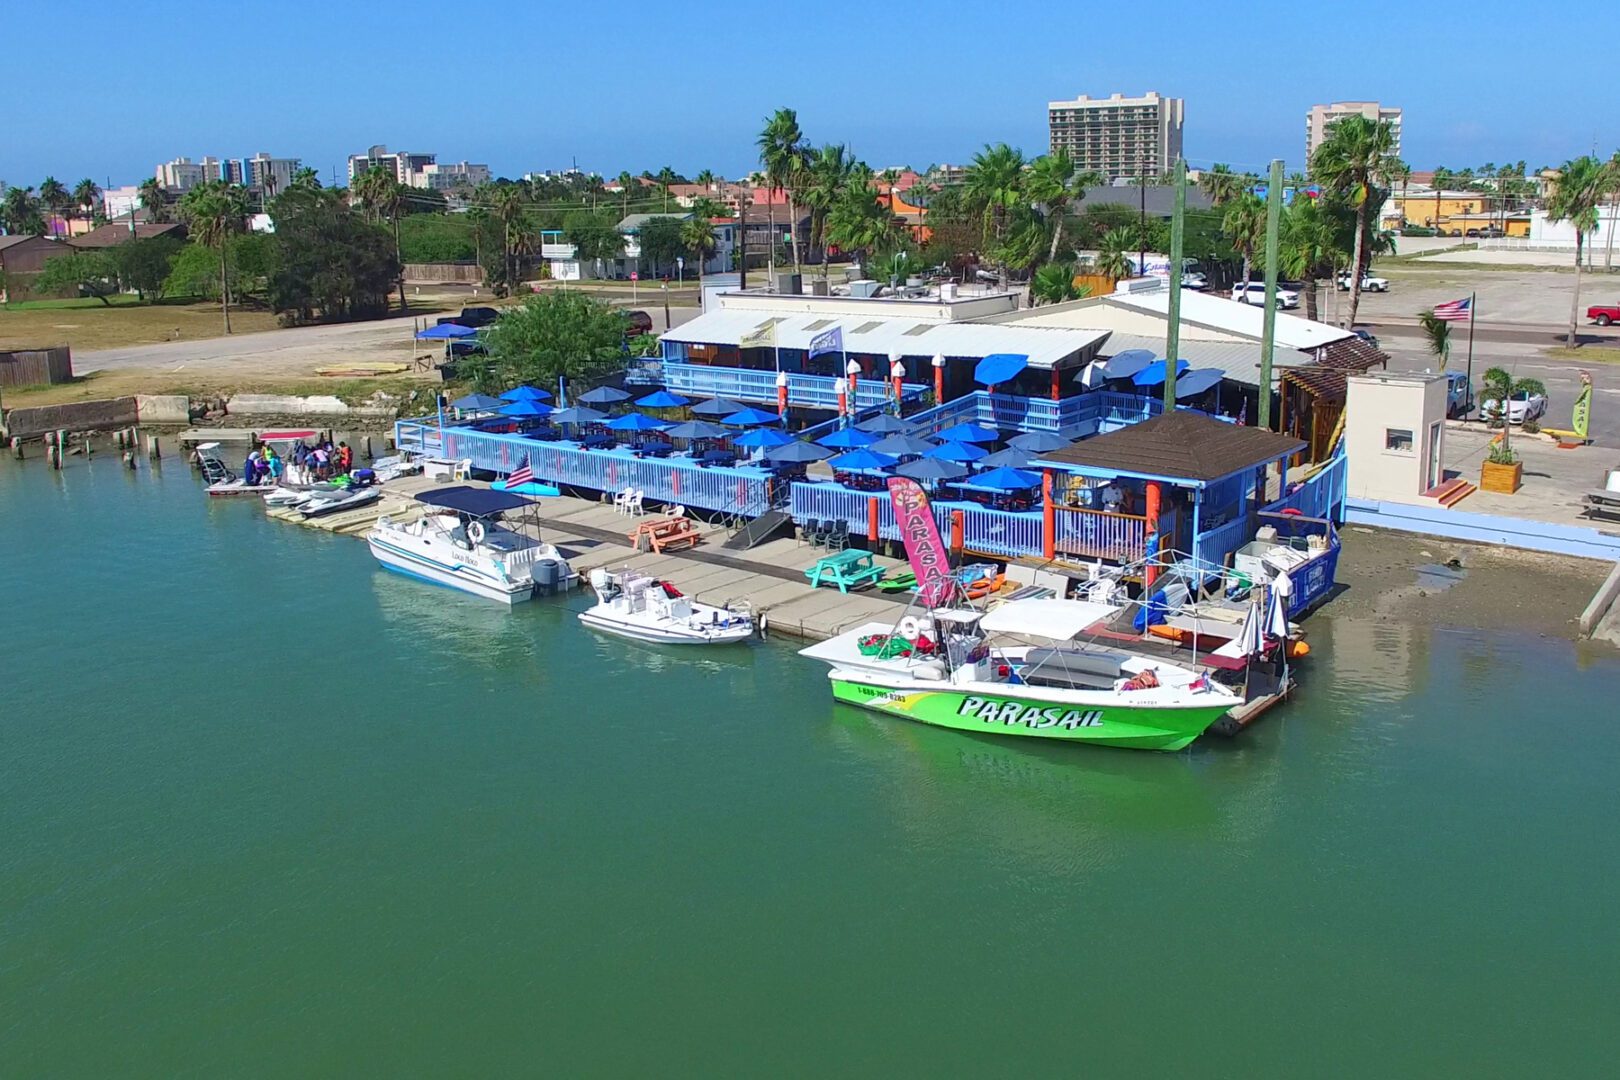 Vacationing at South Padre Island this summer? - Lobo Del Mar Cafe